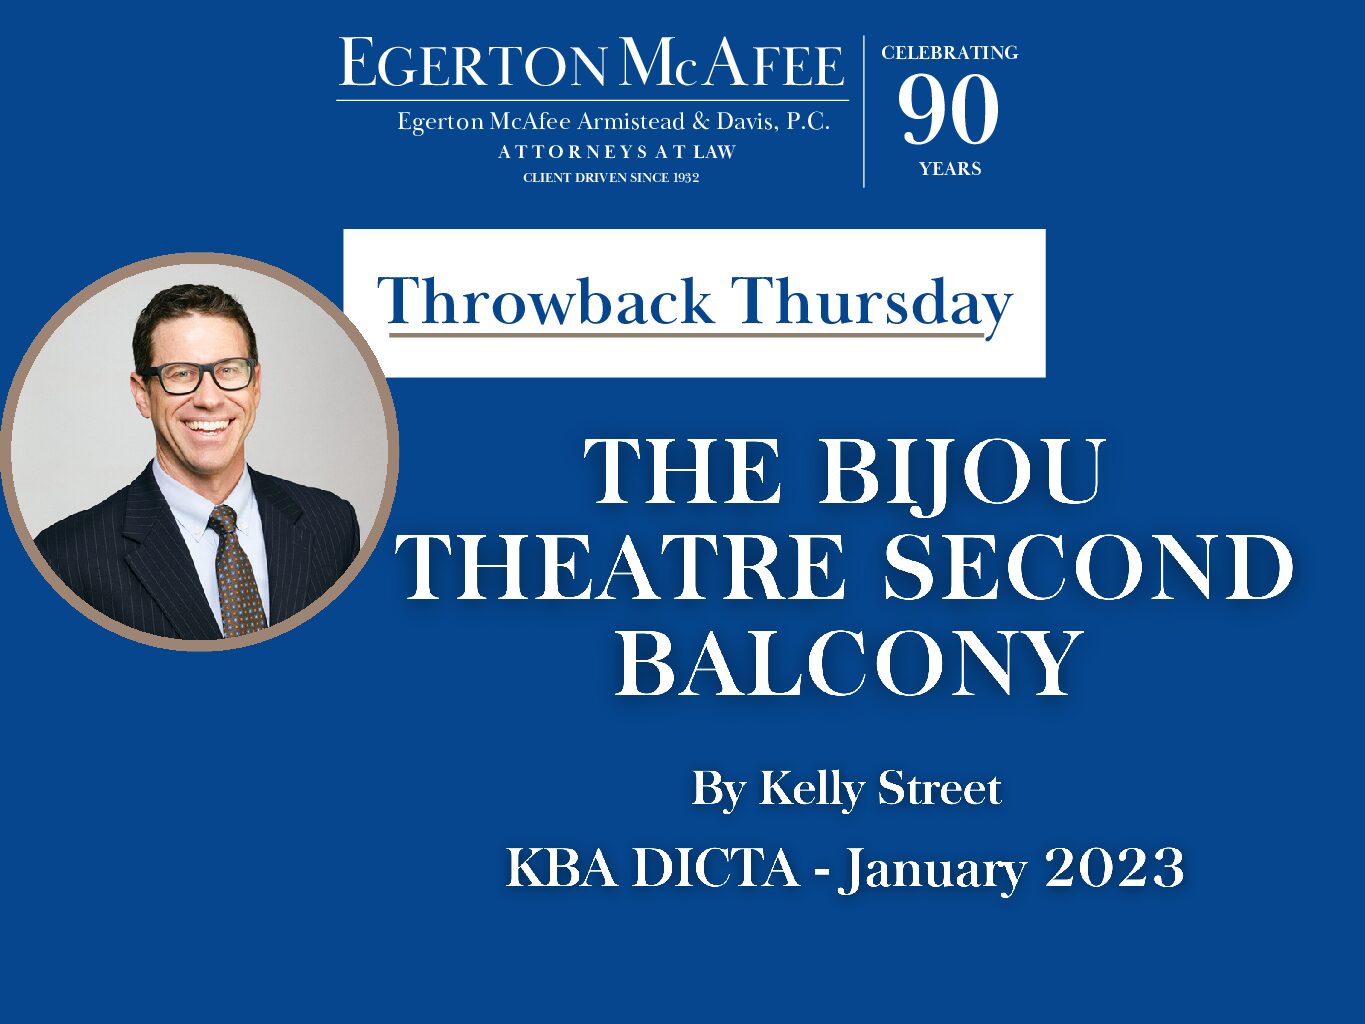 Throwback Thursday – THE BIJOU THEATRE SECOND BALCONY by Kelly Street